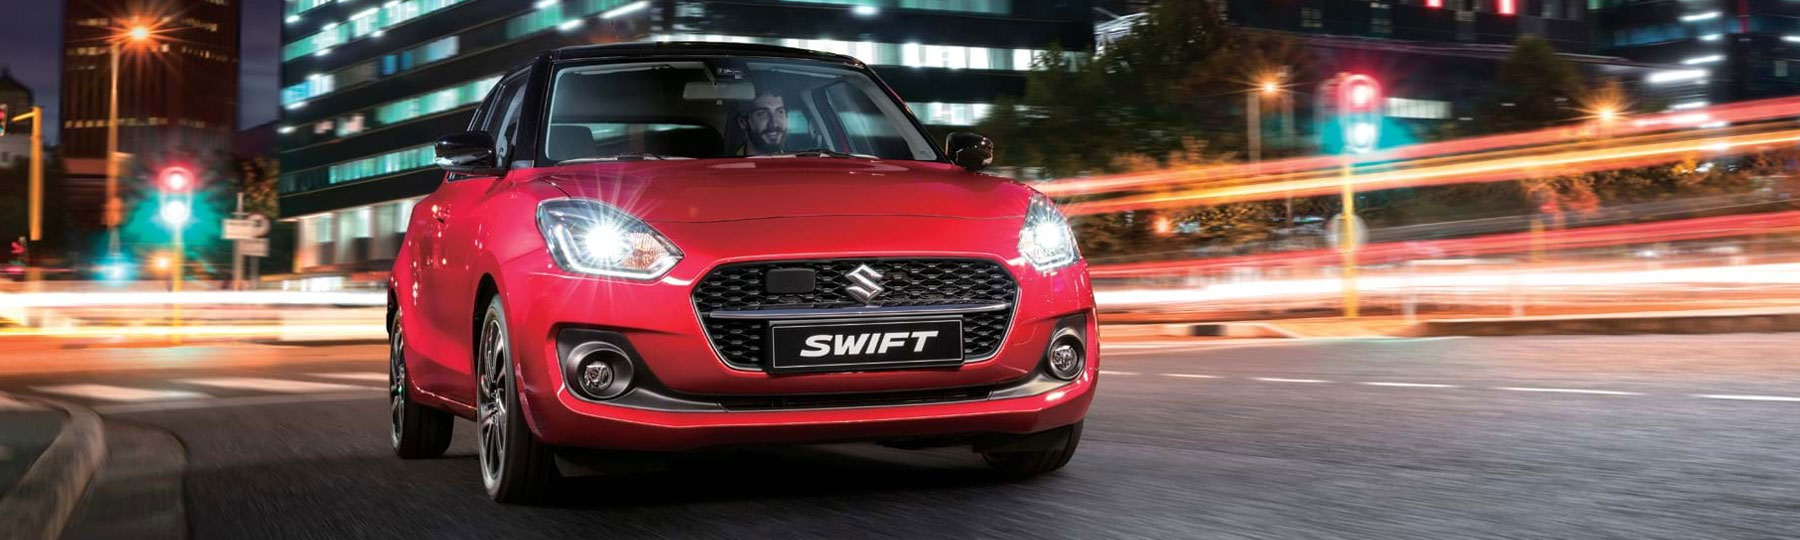 Suzuki Swift Personal Contract Hire Offer